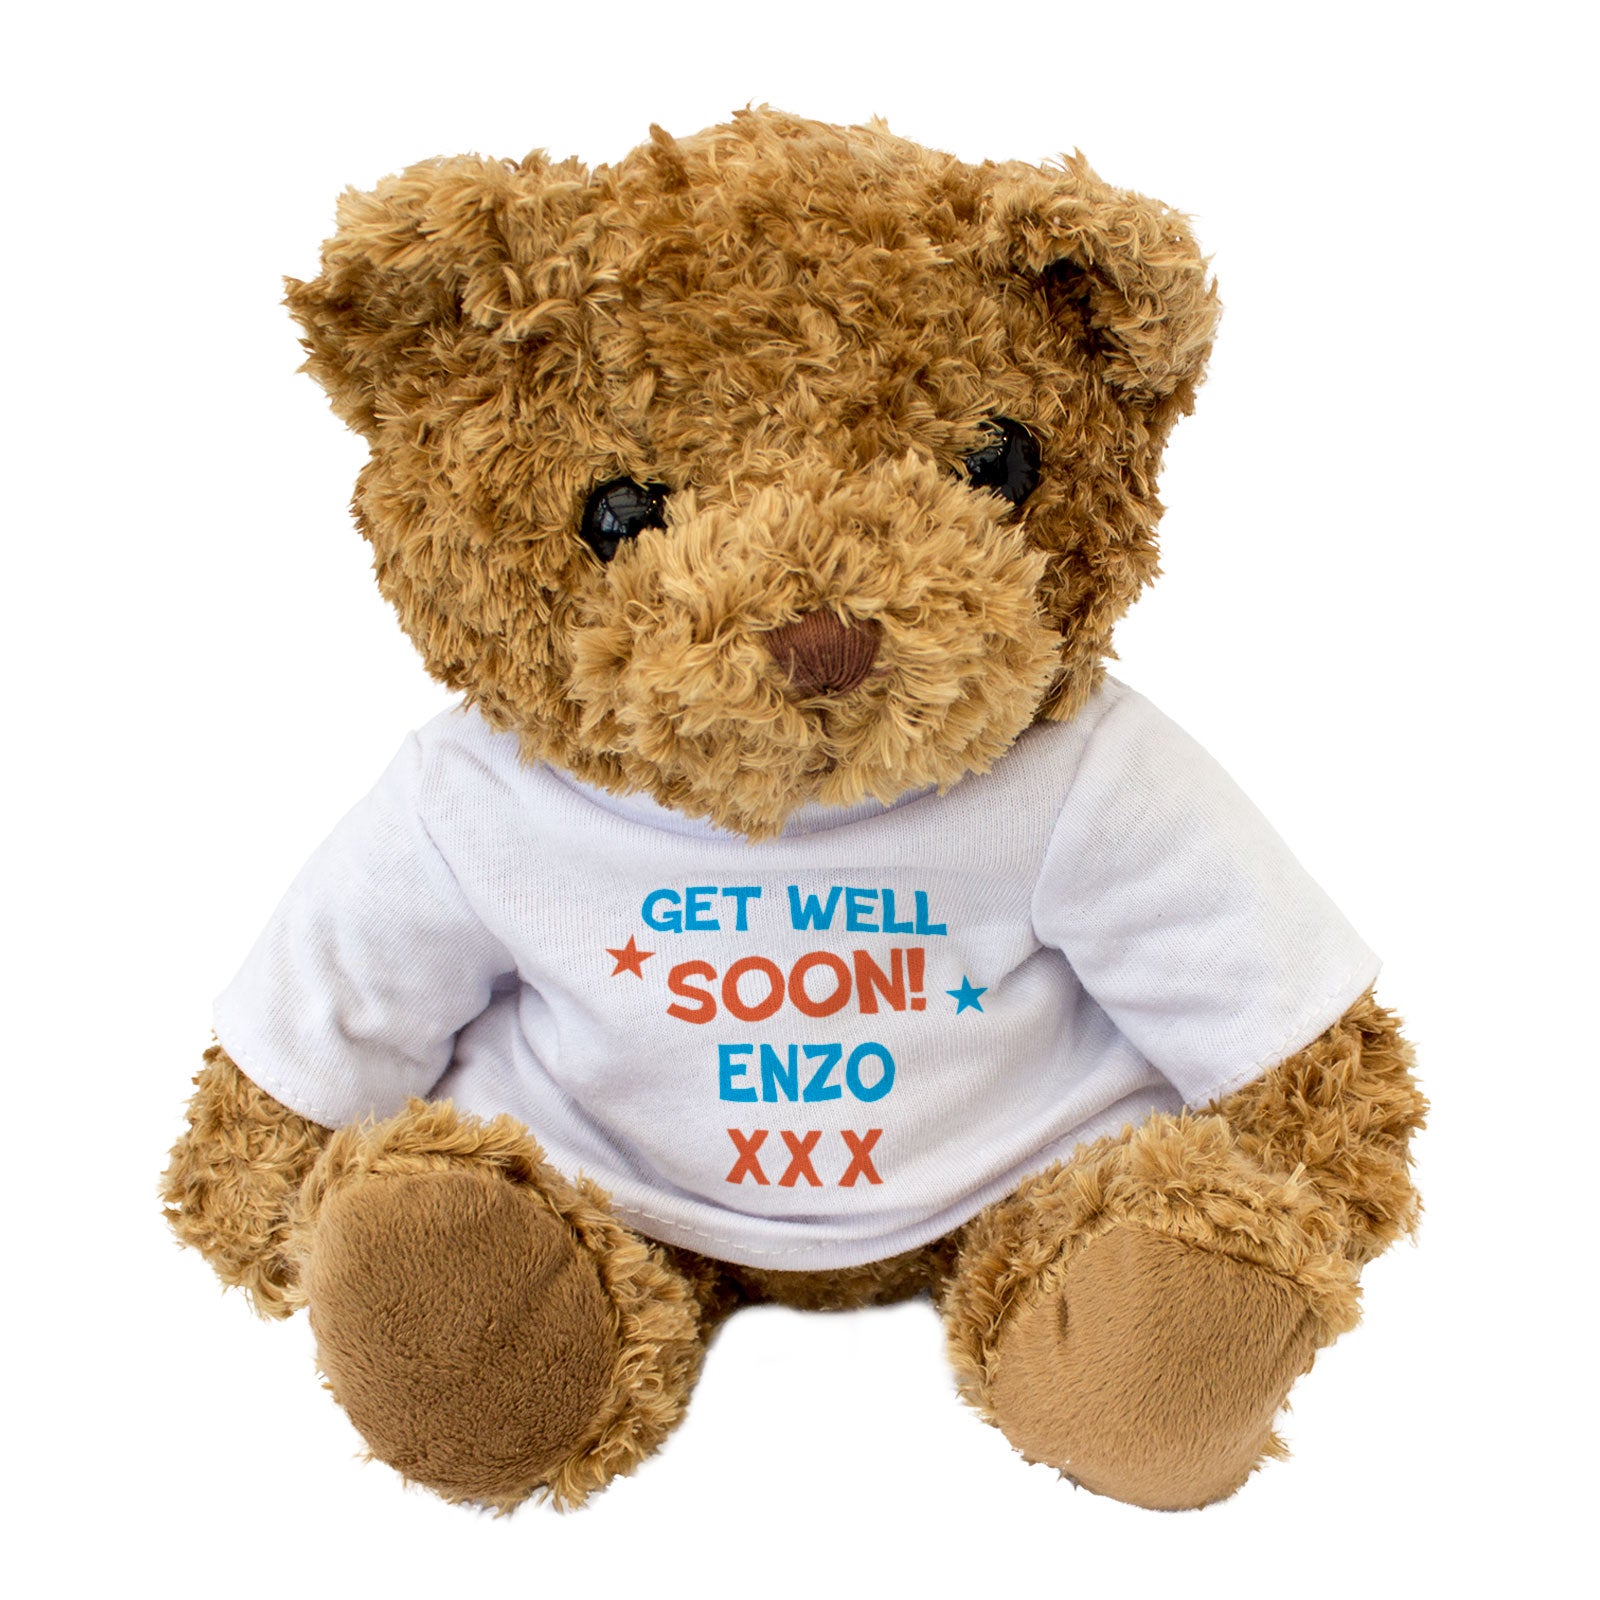 Get Well Soon Enzo - Teddy Bear